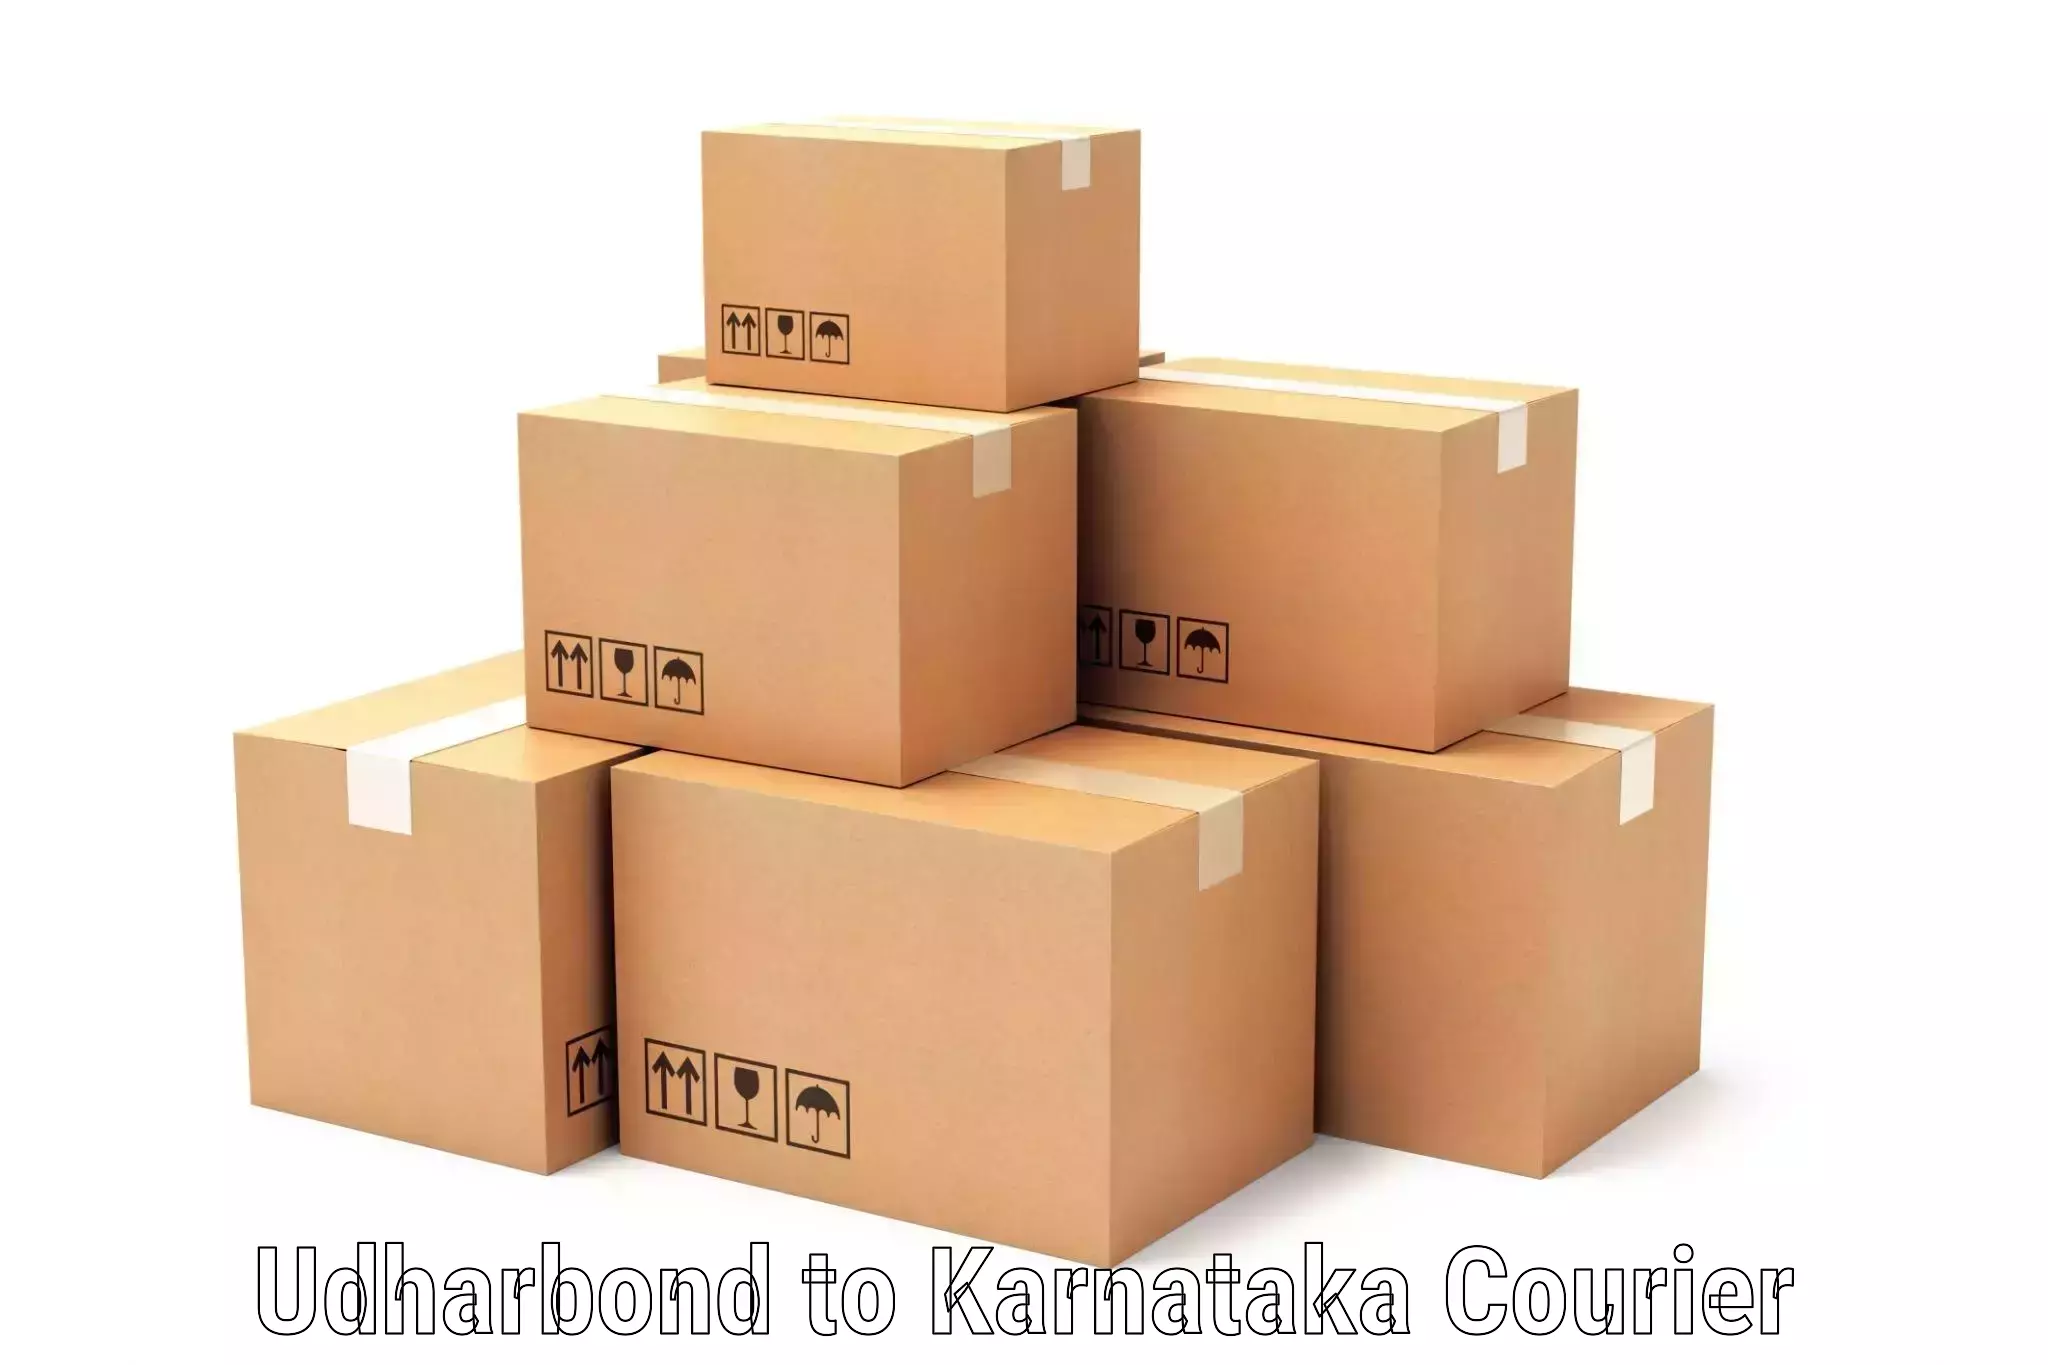 Supply chain efficiency Udharbond to Karnataka